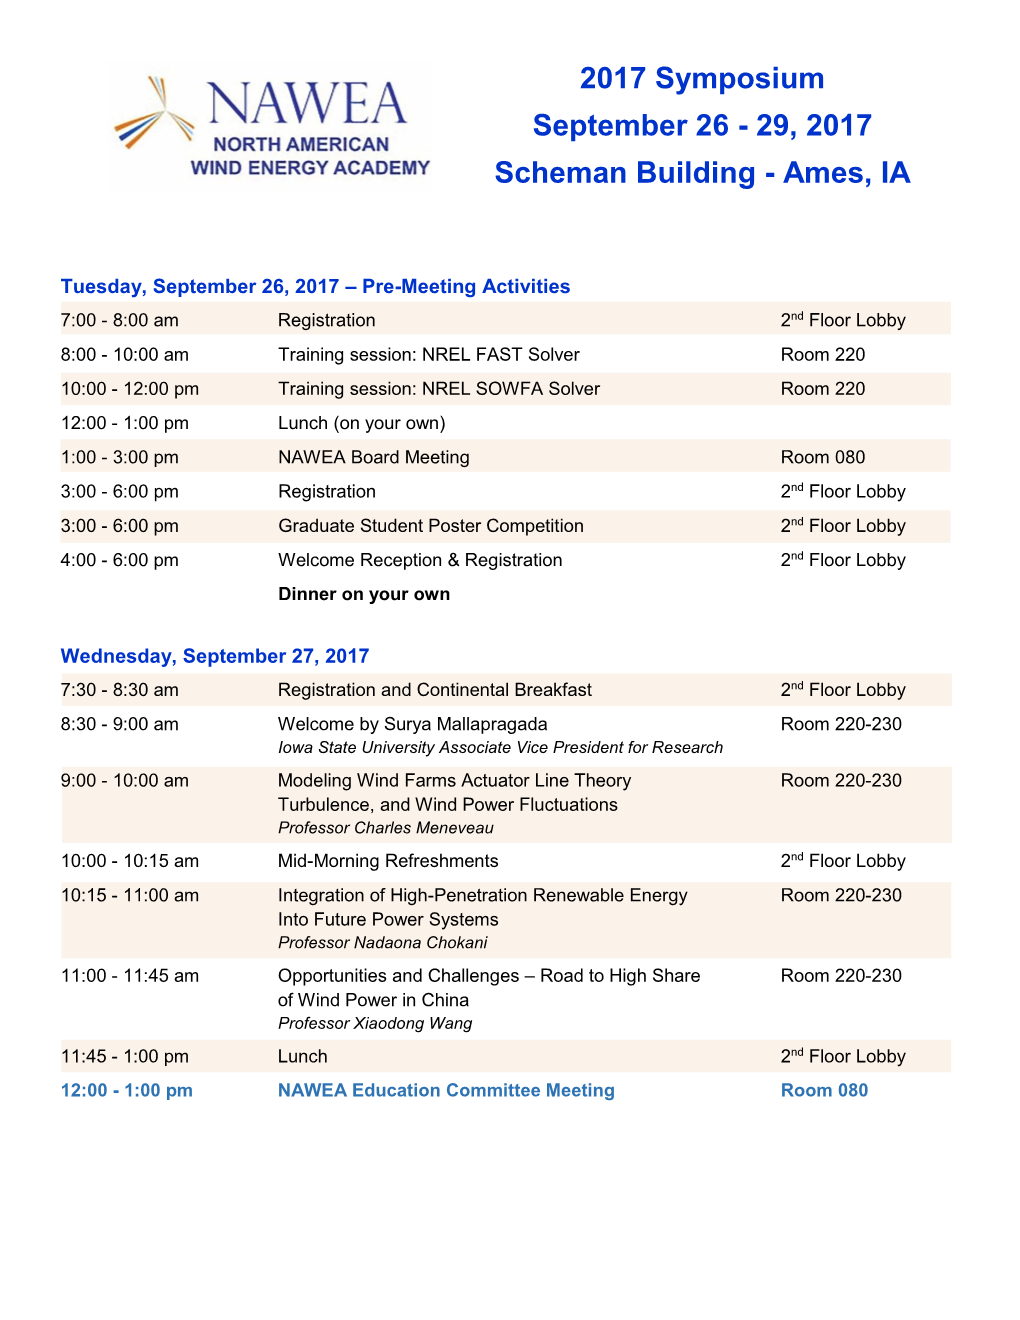 2017 NAWEA Symposium Agenda